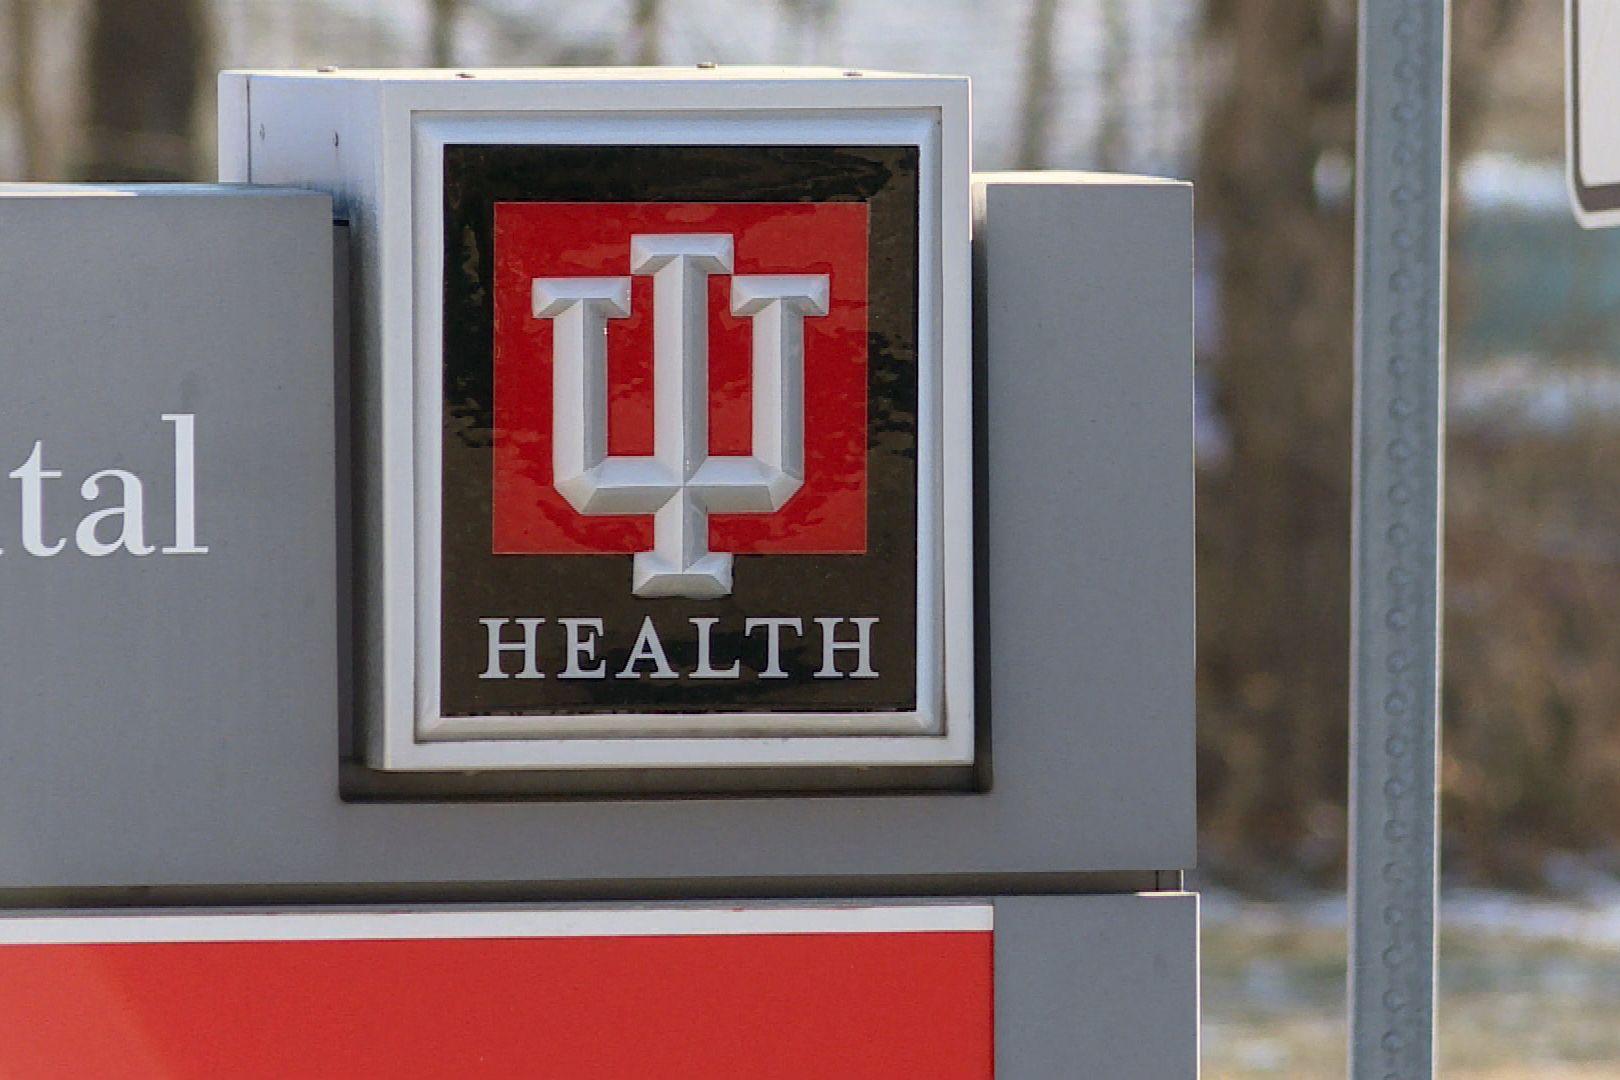 IU Health Logo - IU Health Set To Open New $9M Robotic Supply Warehouse | News ...